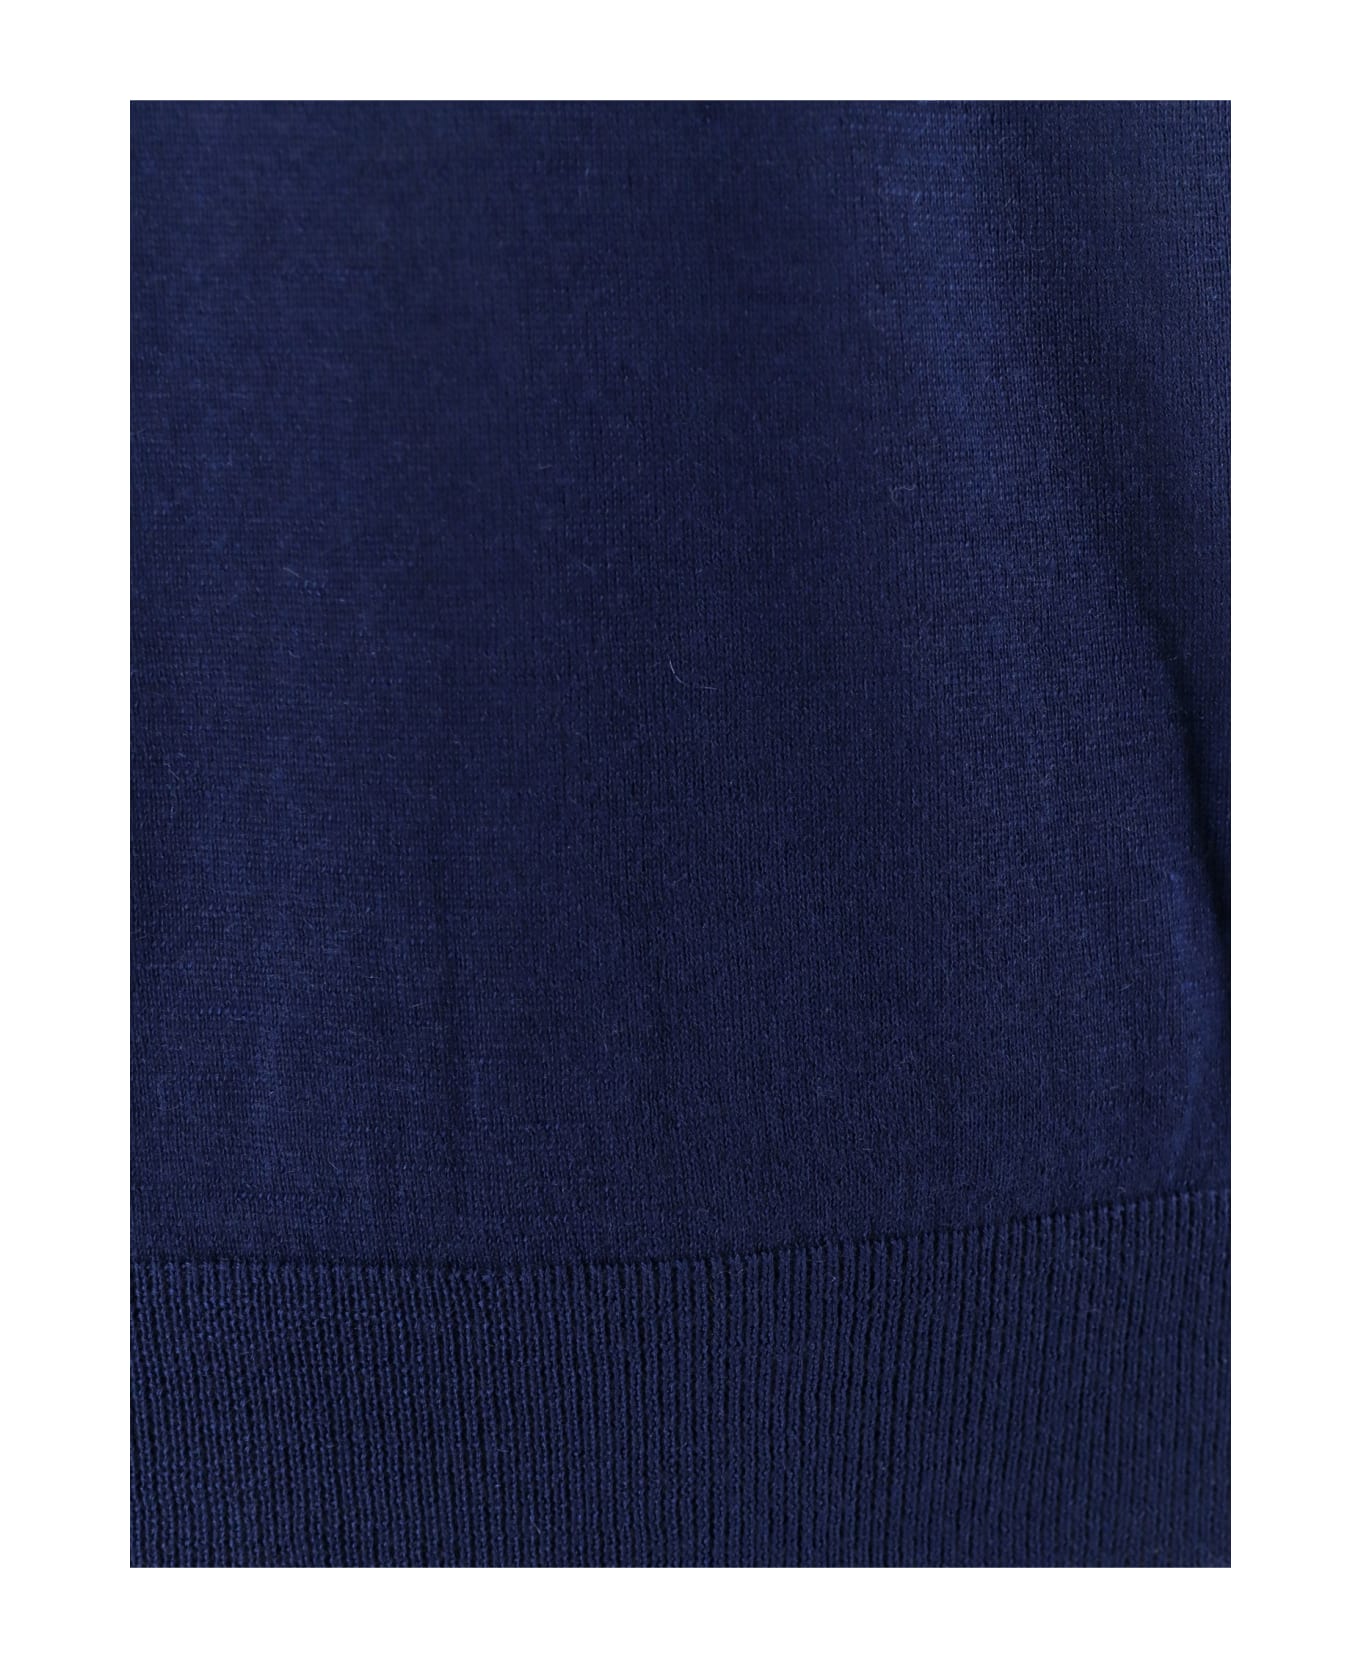 Corneliani Sweater - Blue ニットウェア